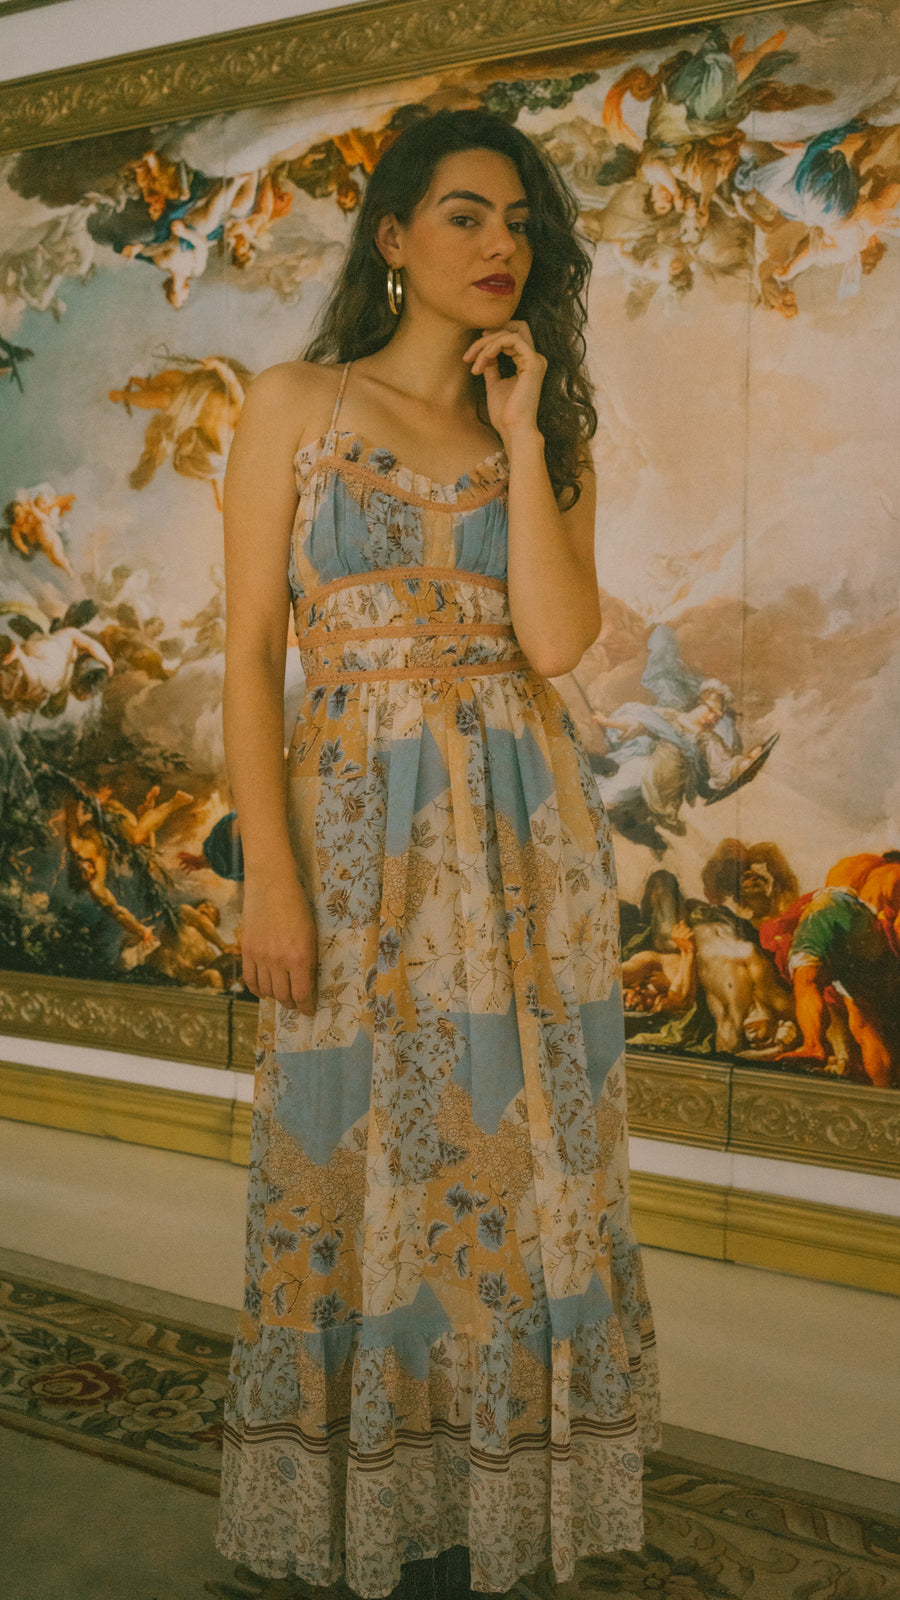 Cynthia Dress in Indigo Paisley Floral